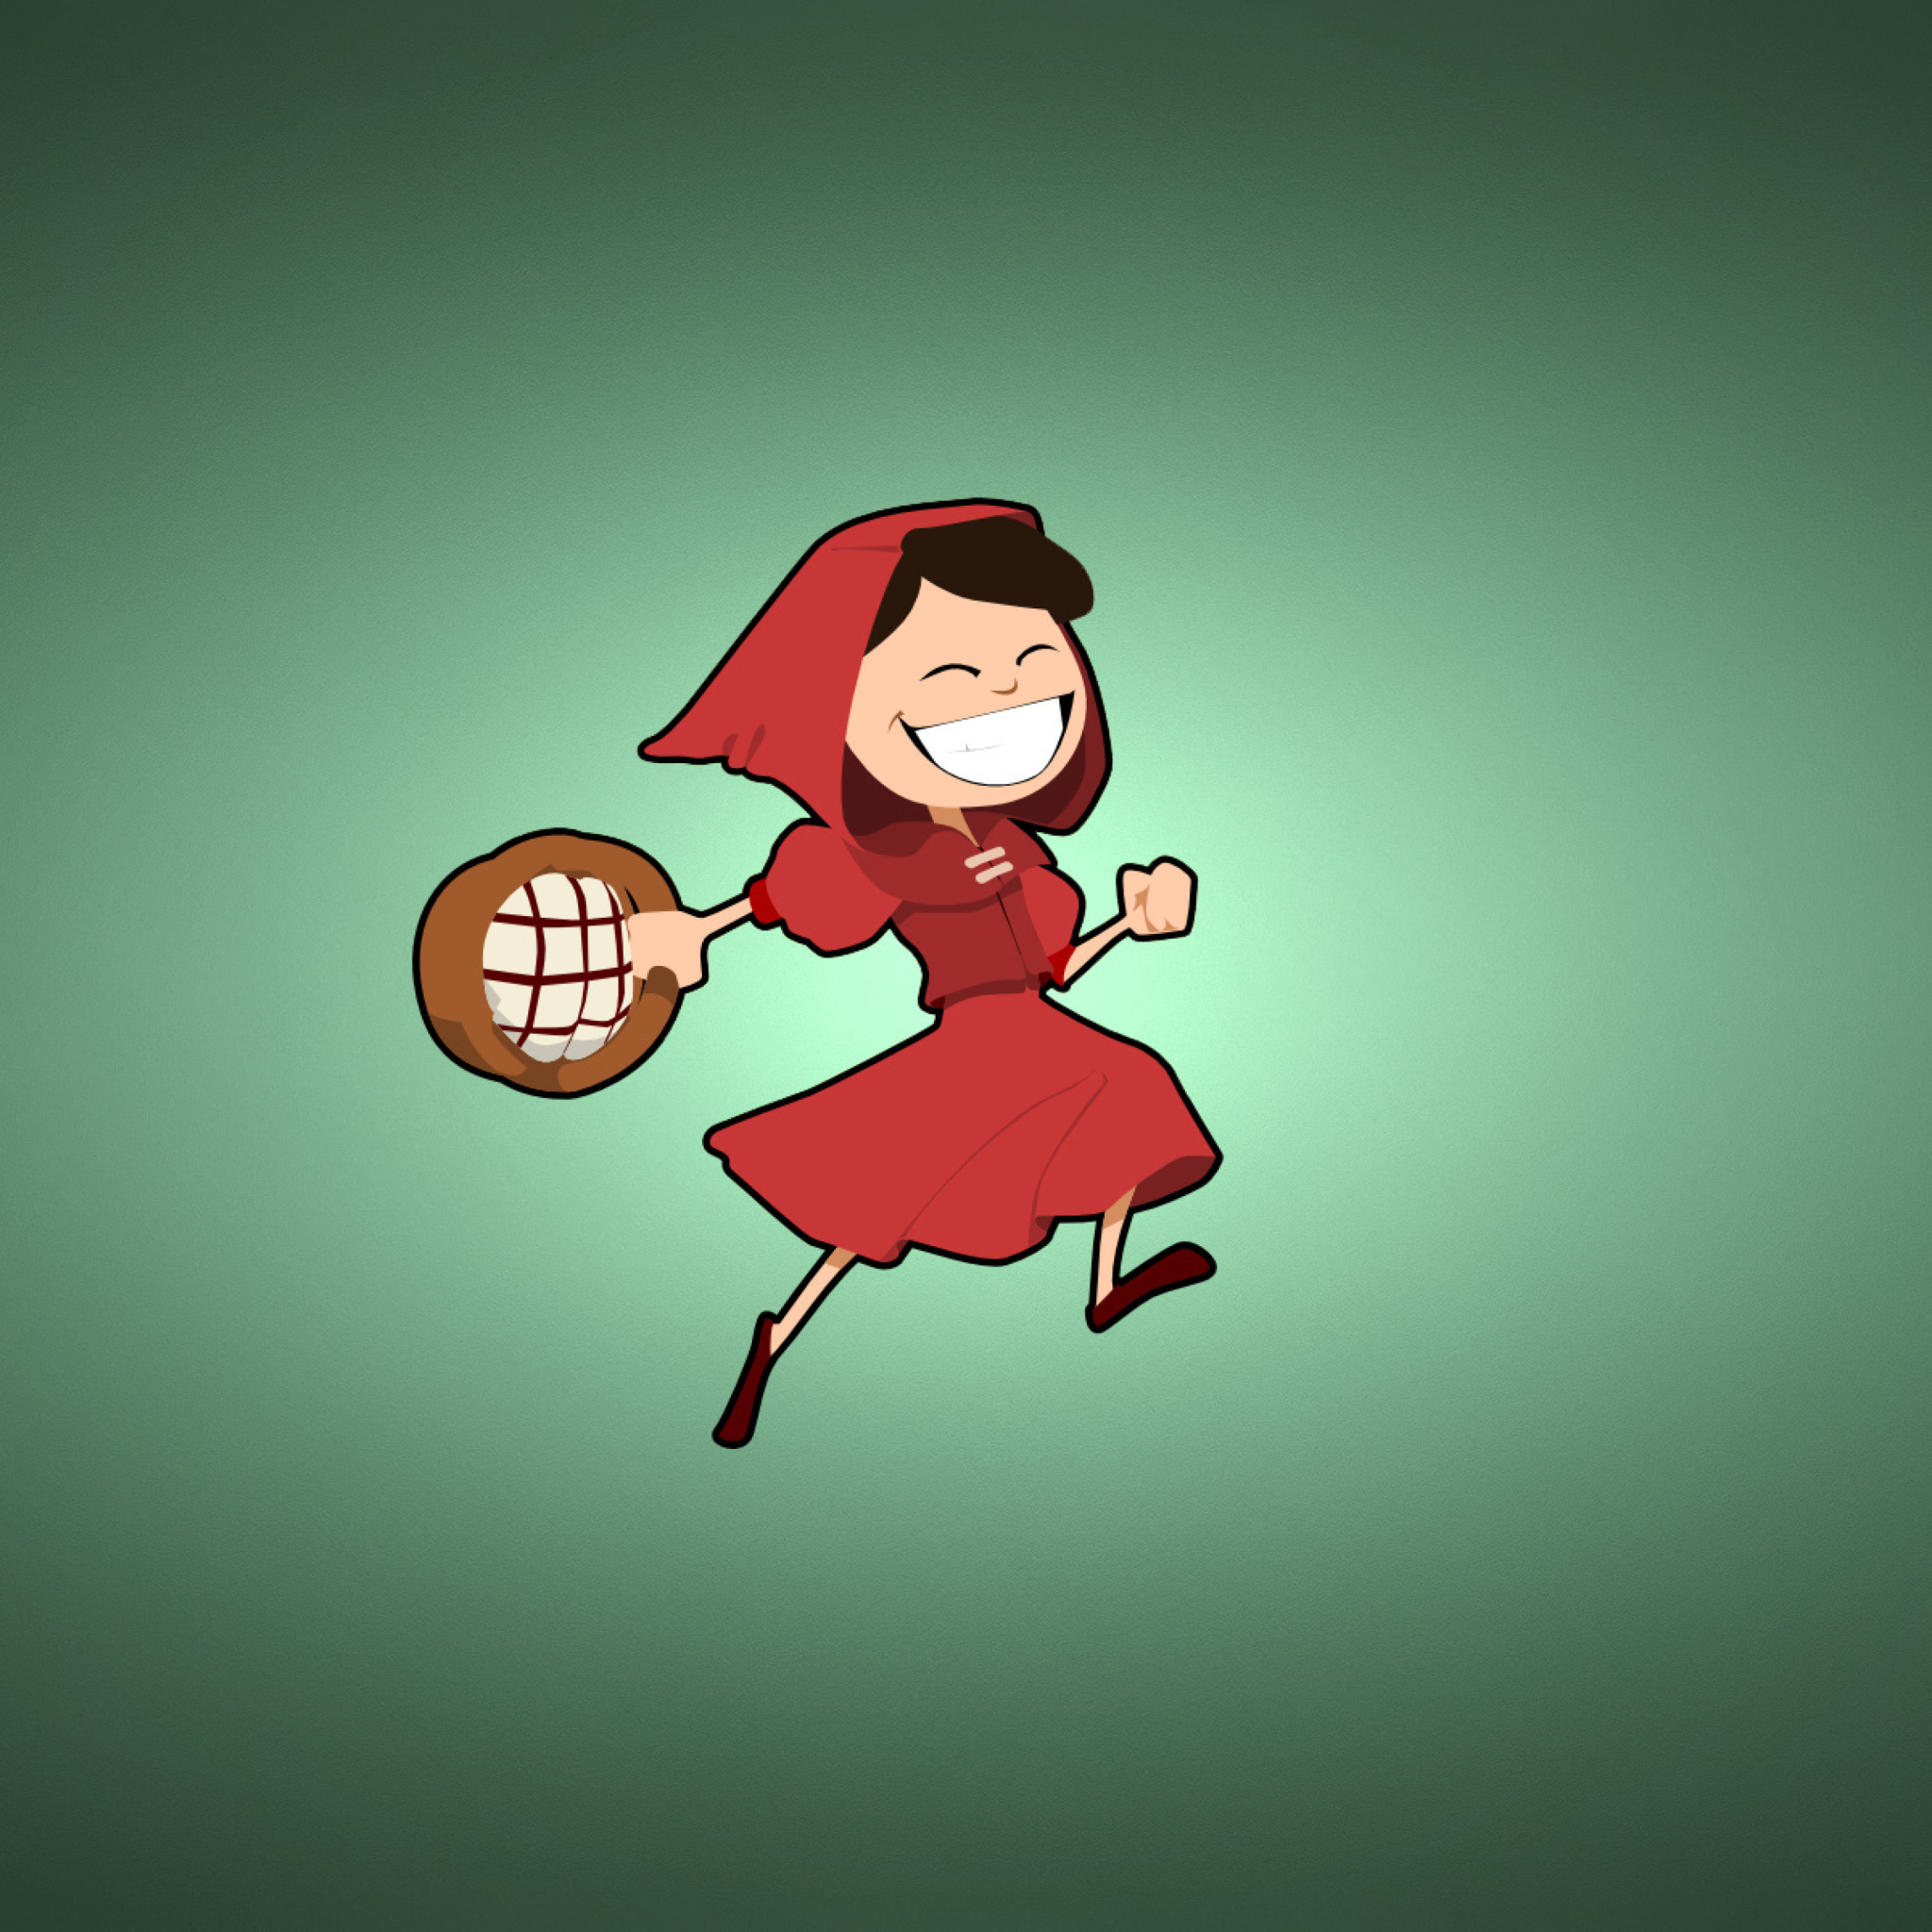 Red Riding Hood wallpaper 2048x2048